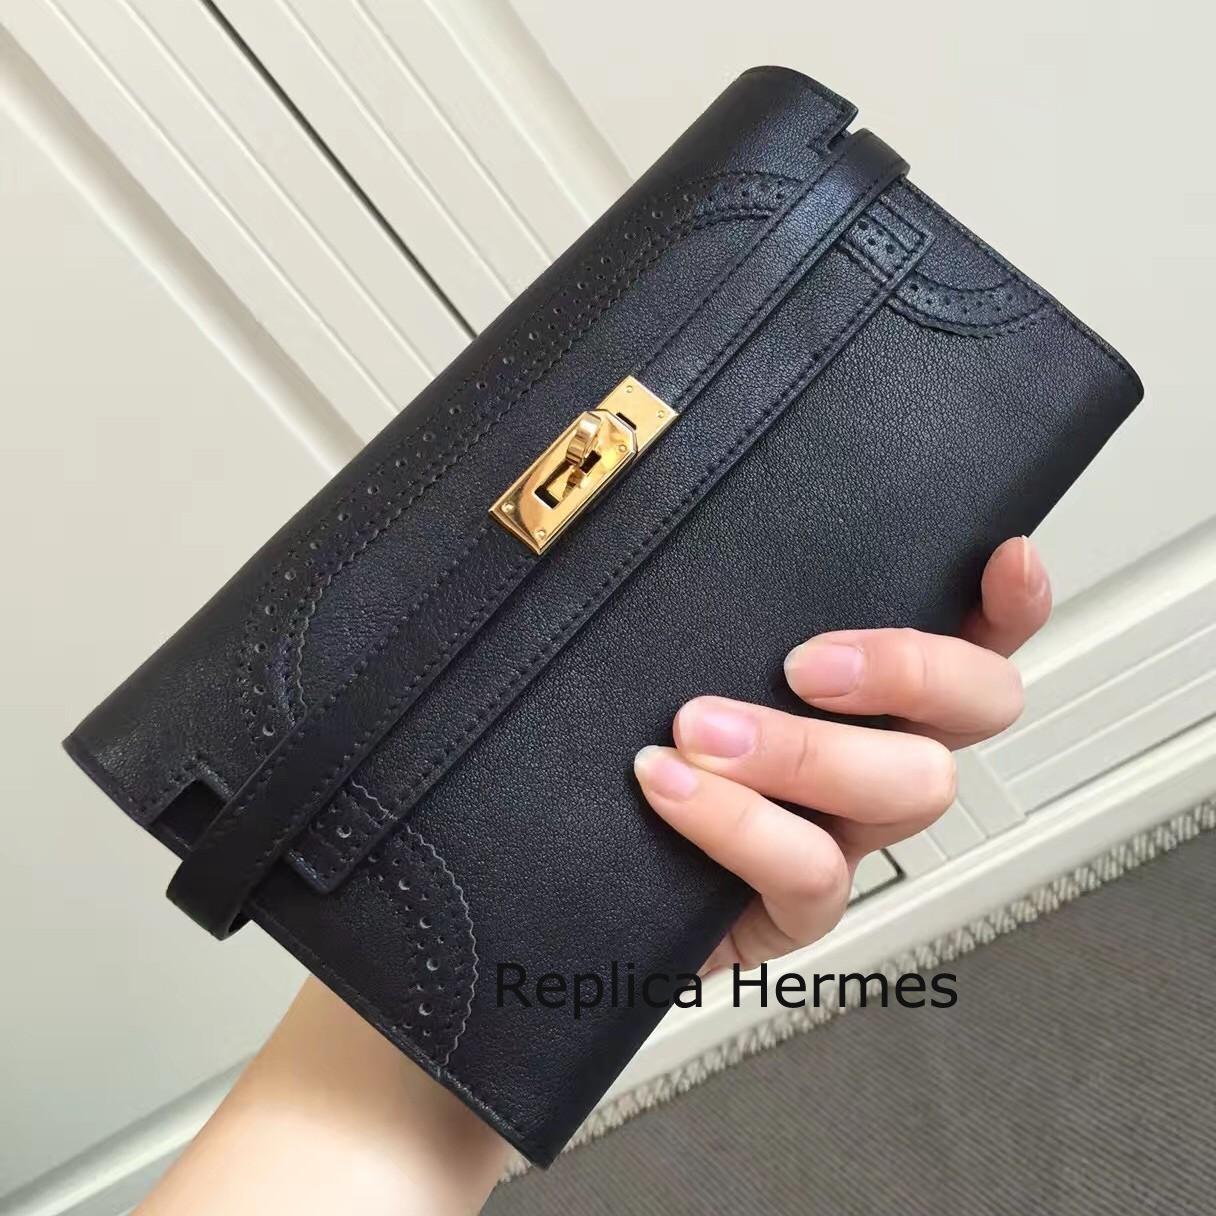 Replica Hermes Kelly Ghillies Wallet In Black Swift Leather